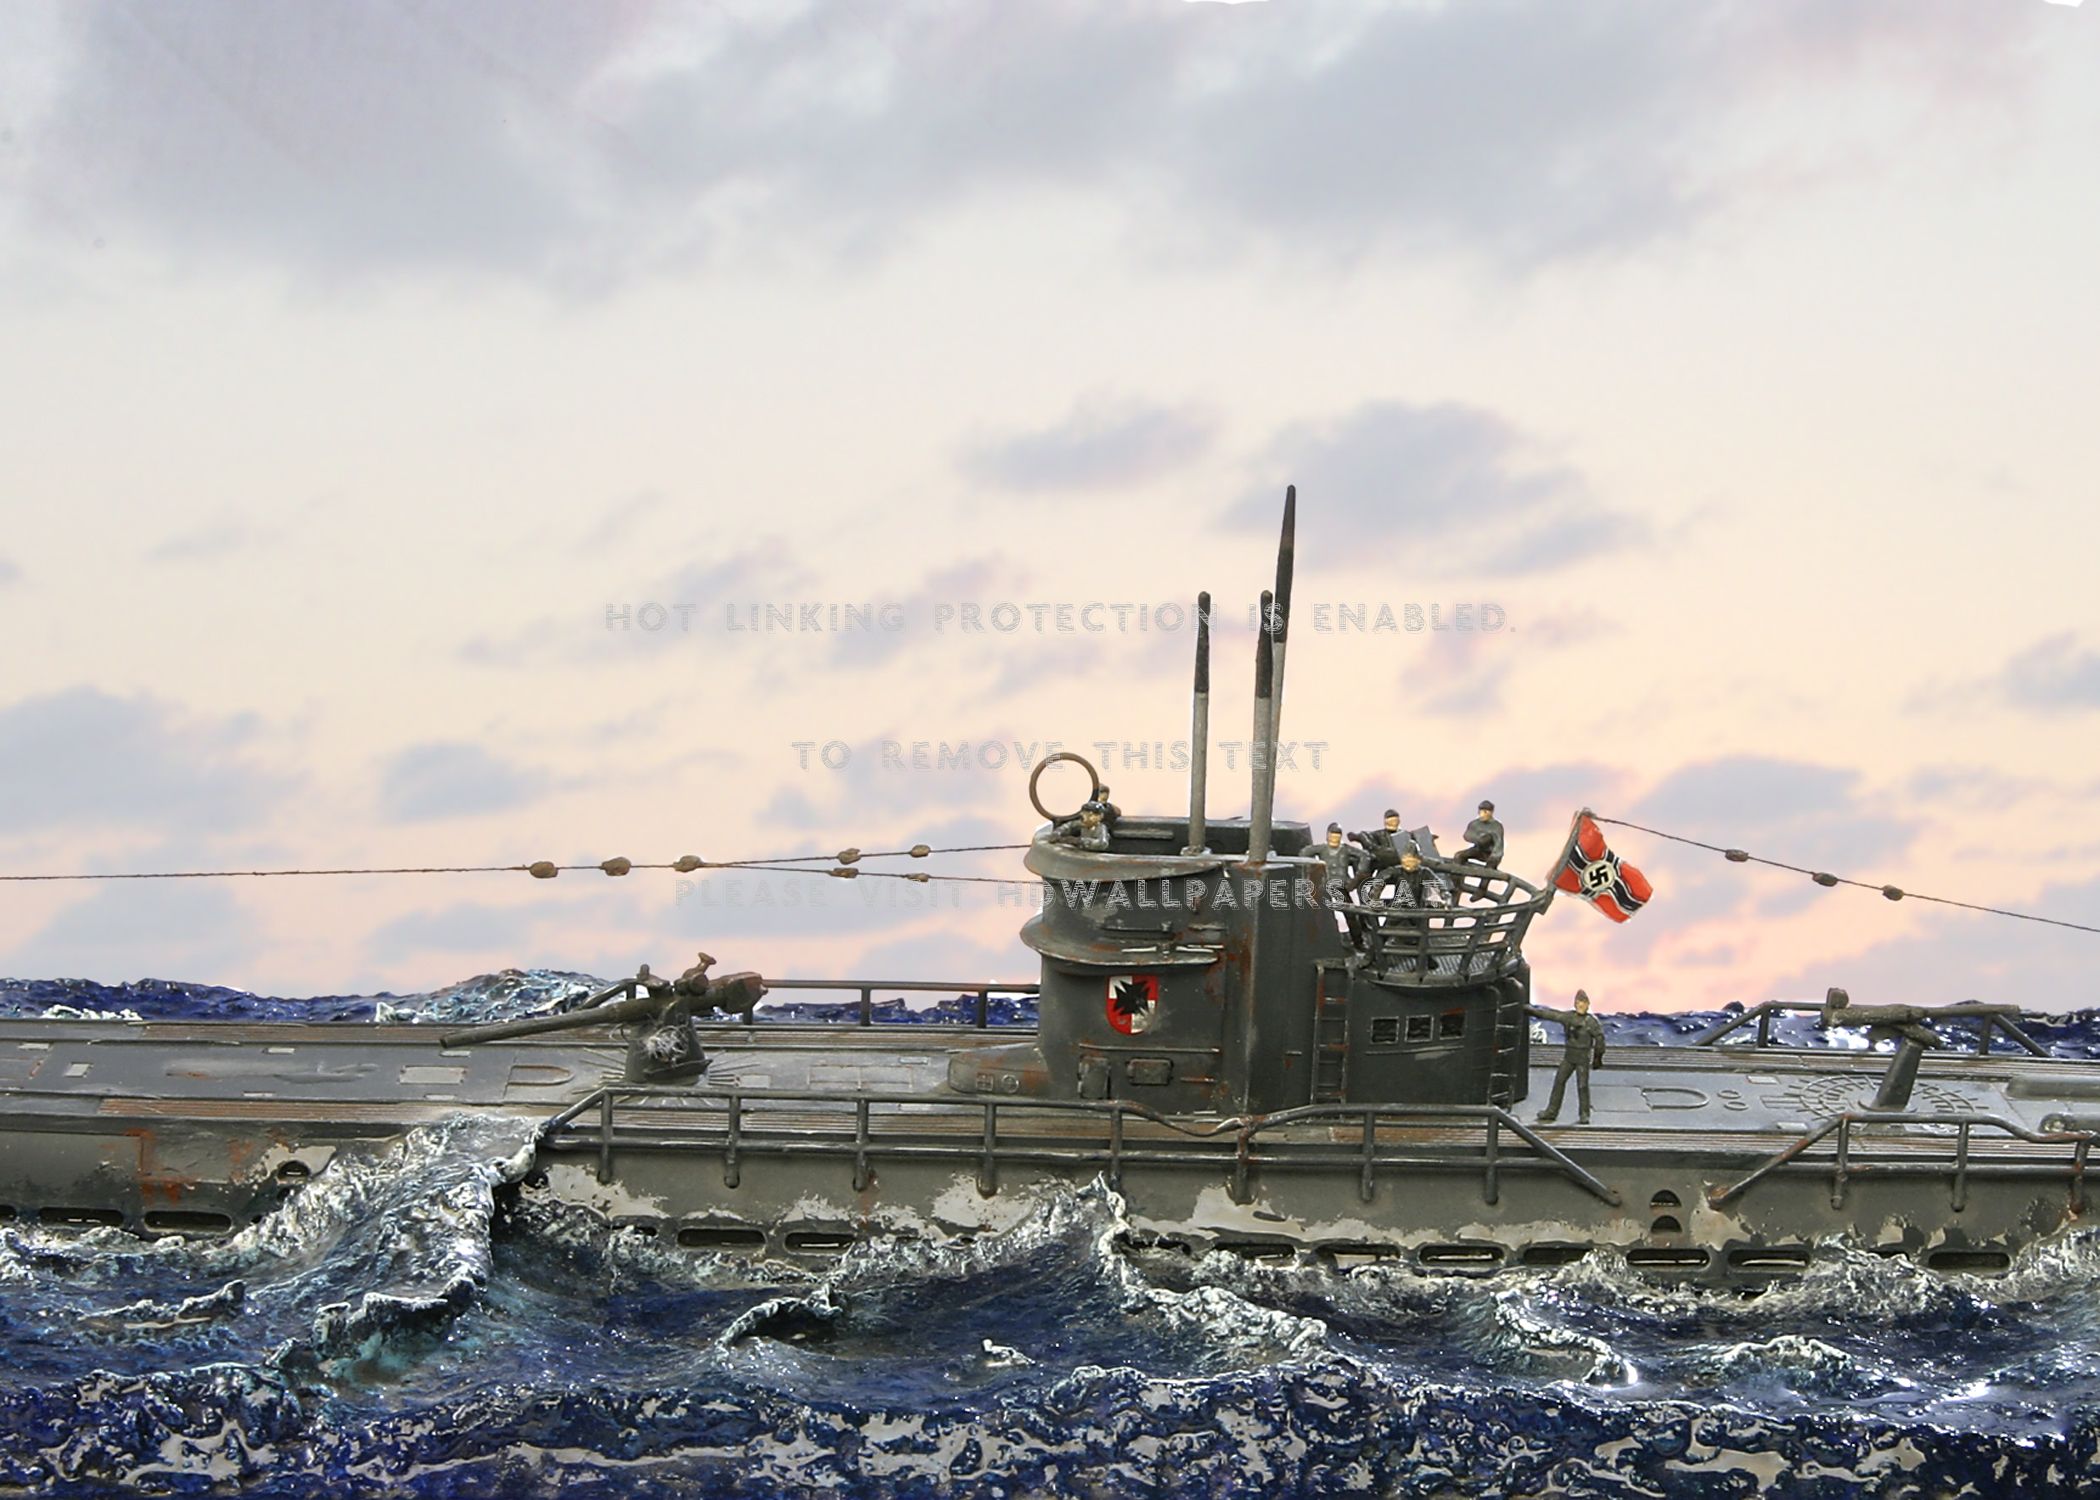 U Boat Test Military Art Ww2